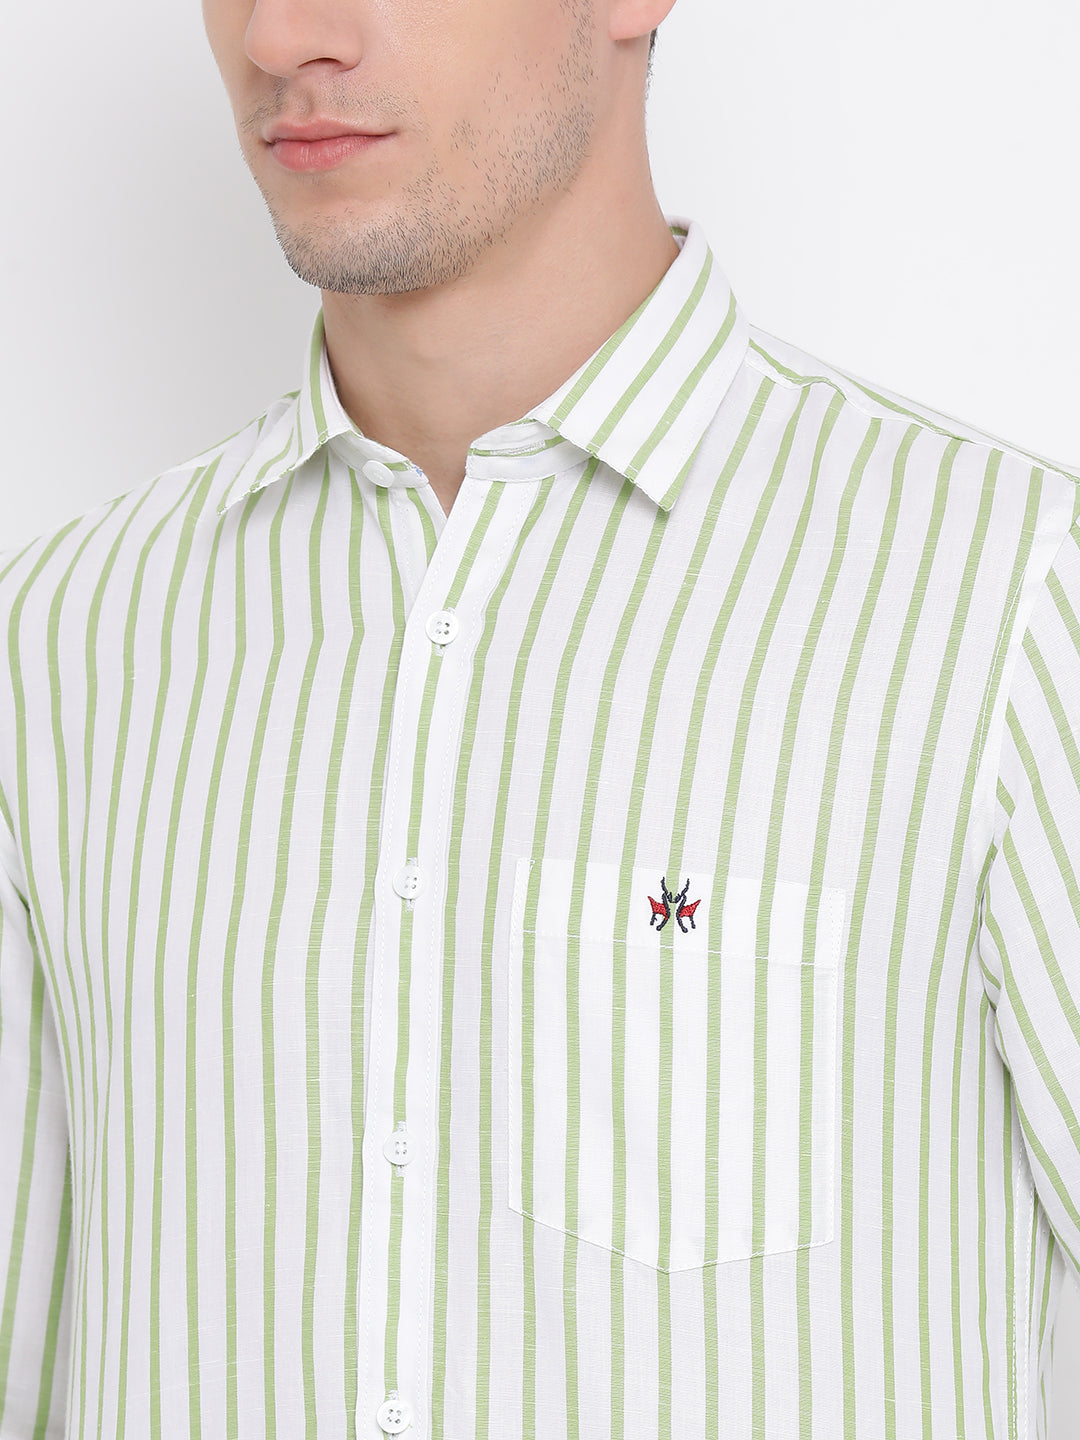 Green Striped Button up Shirt - Men Shirts